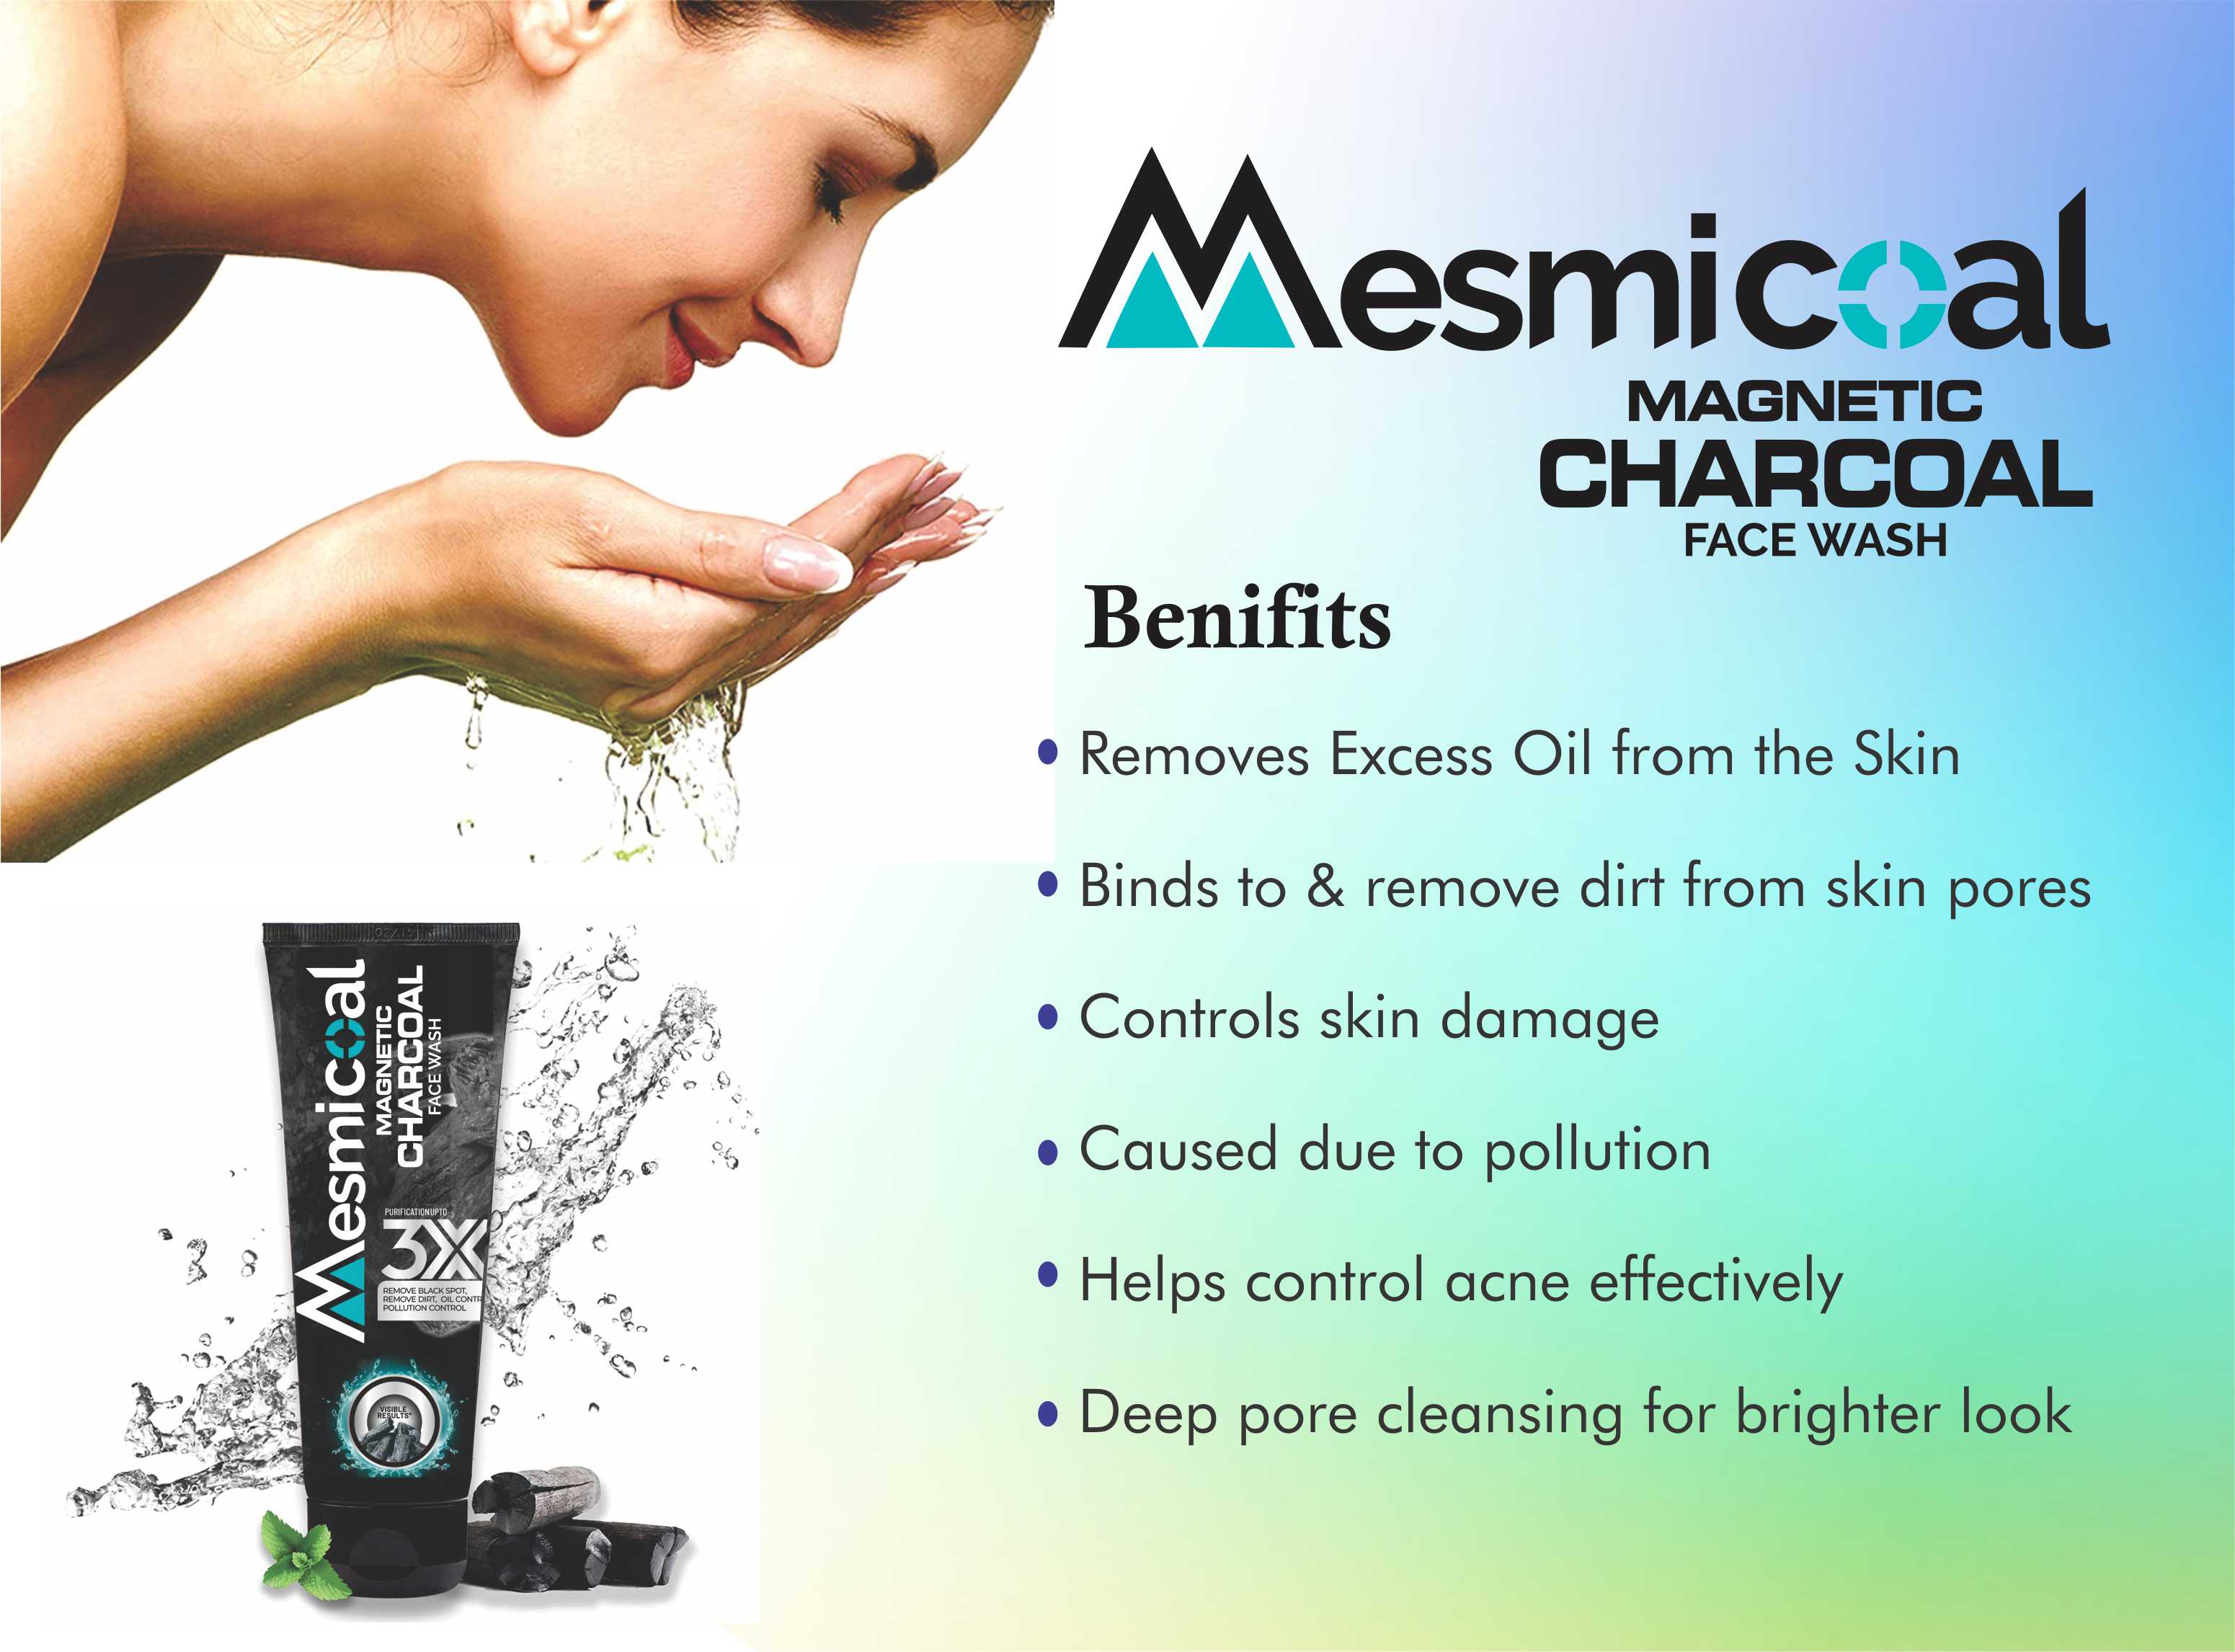 Mesmicoal-Magnetic-Charcoal-Facewash